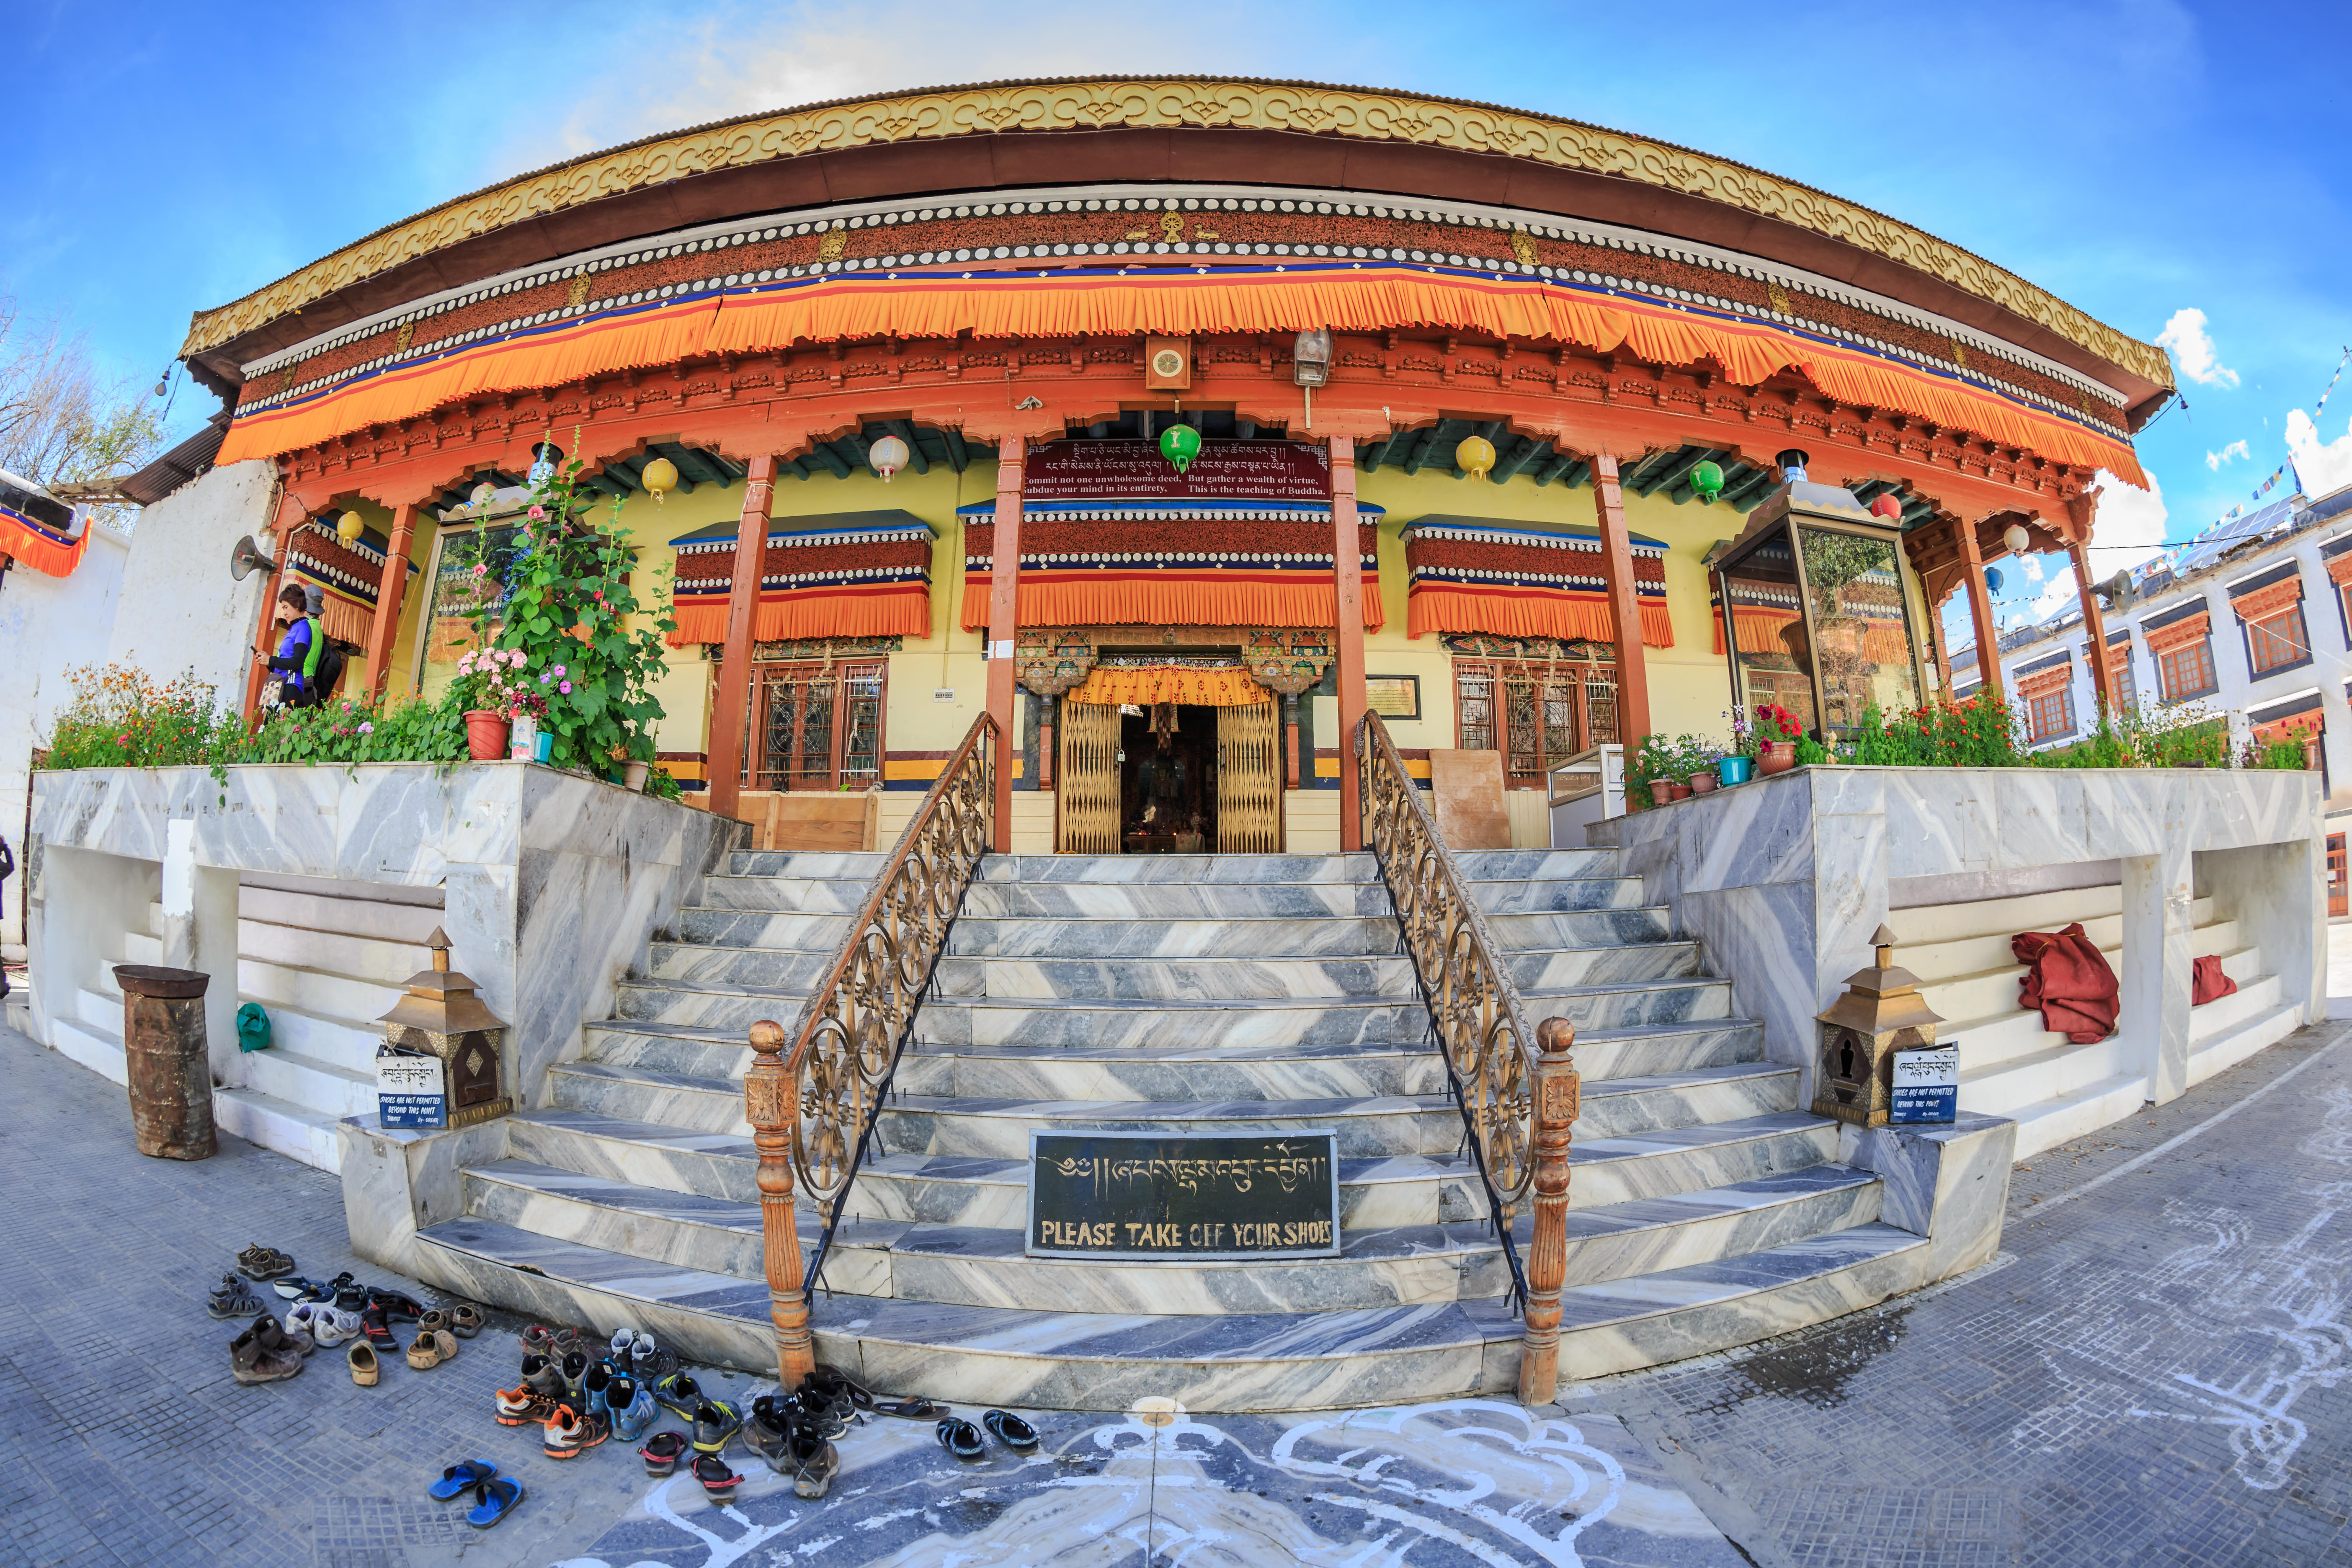  The Chokhang Temple